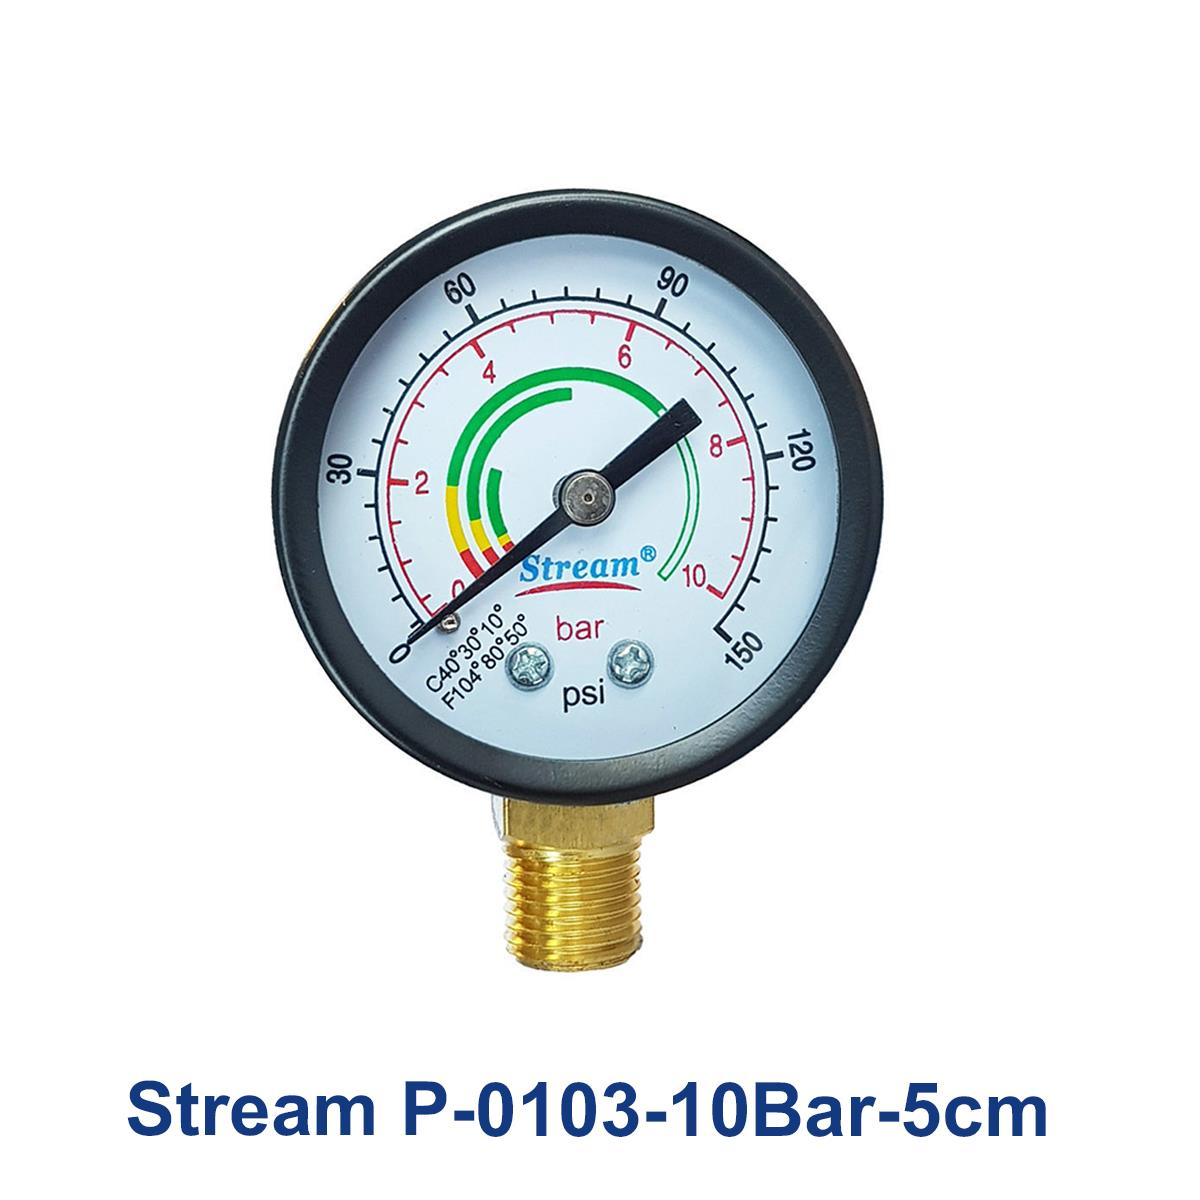 Stream-P-0103-10Bar-5cm